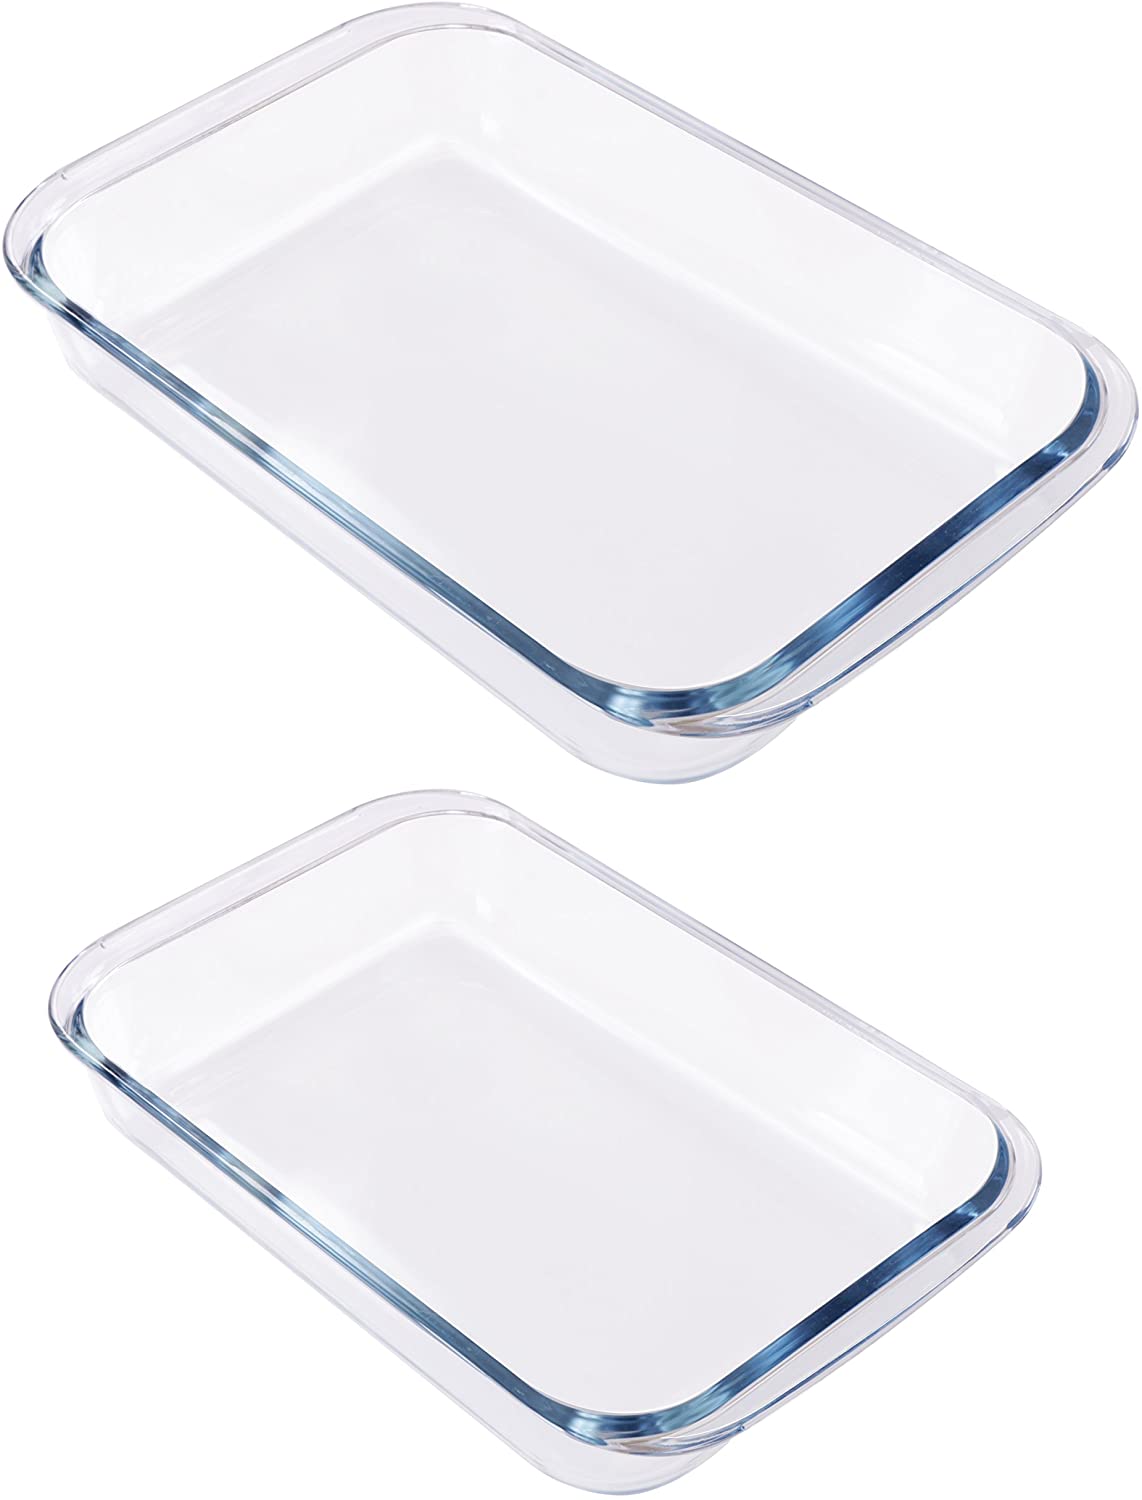 Pyrex Borosilicate Glass Baking Tray